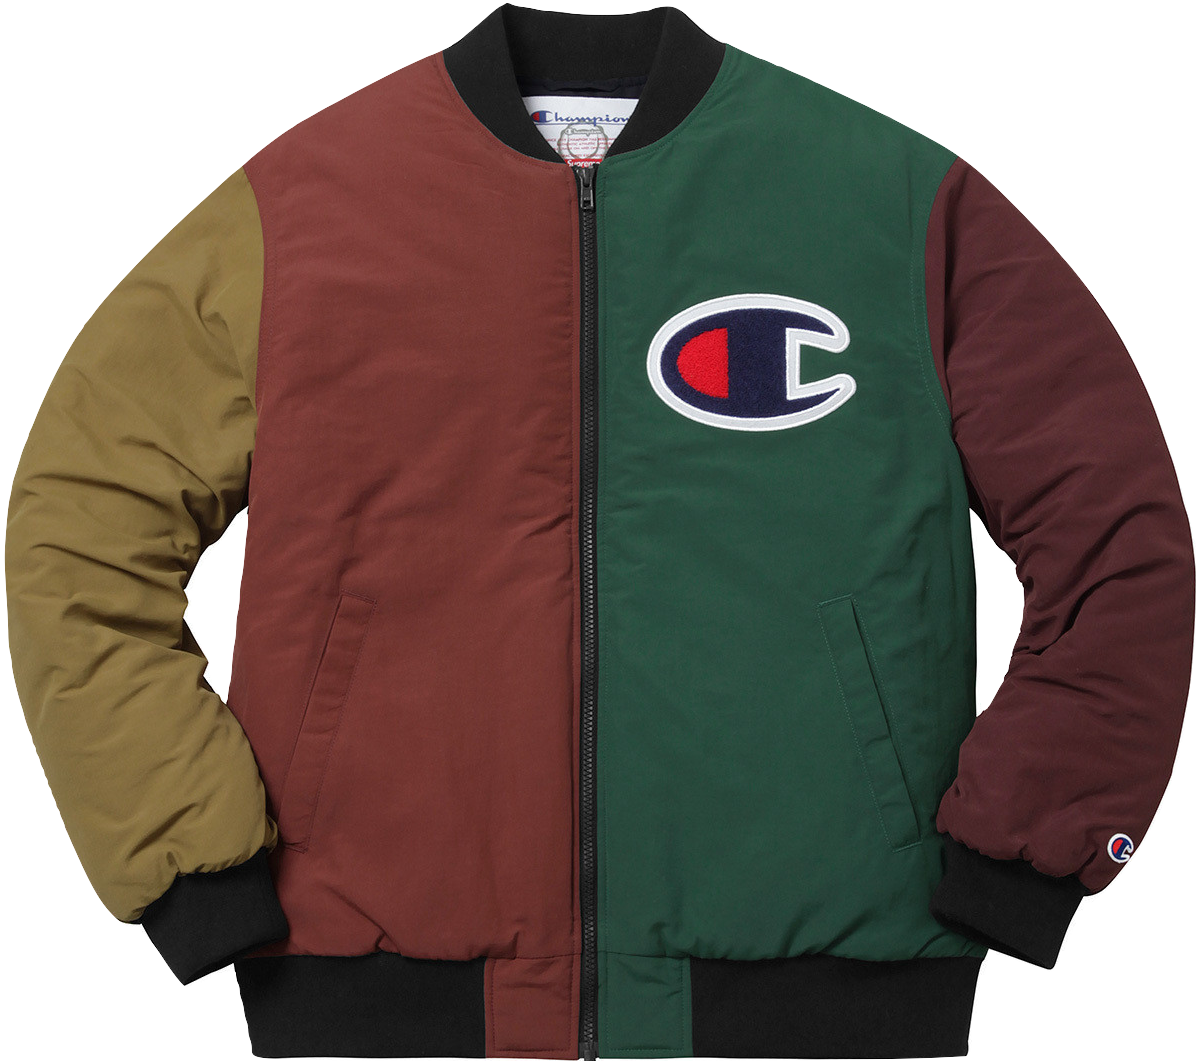 Supreme/Champion Color Blocked Jacket